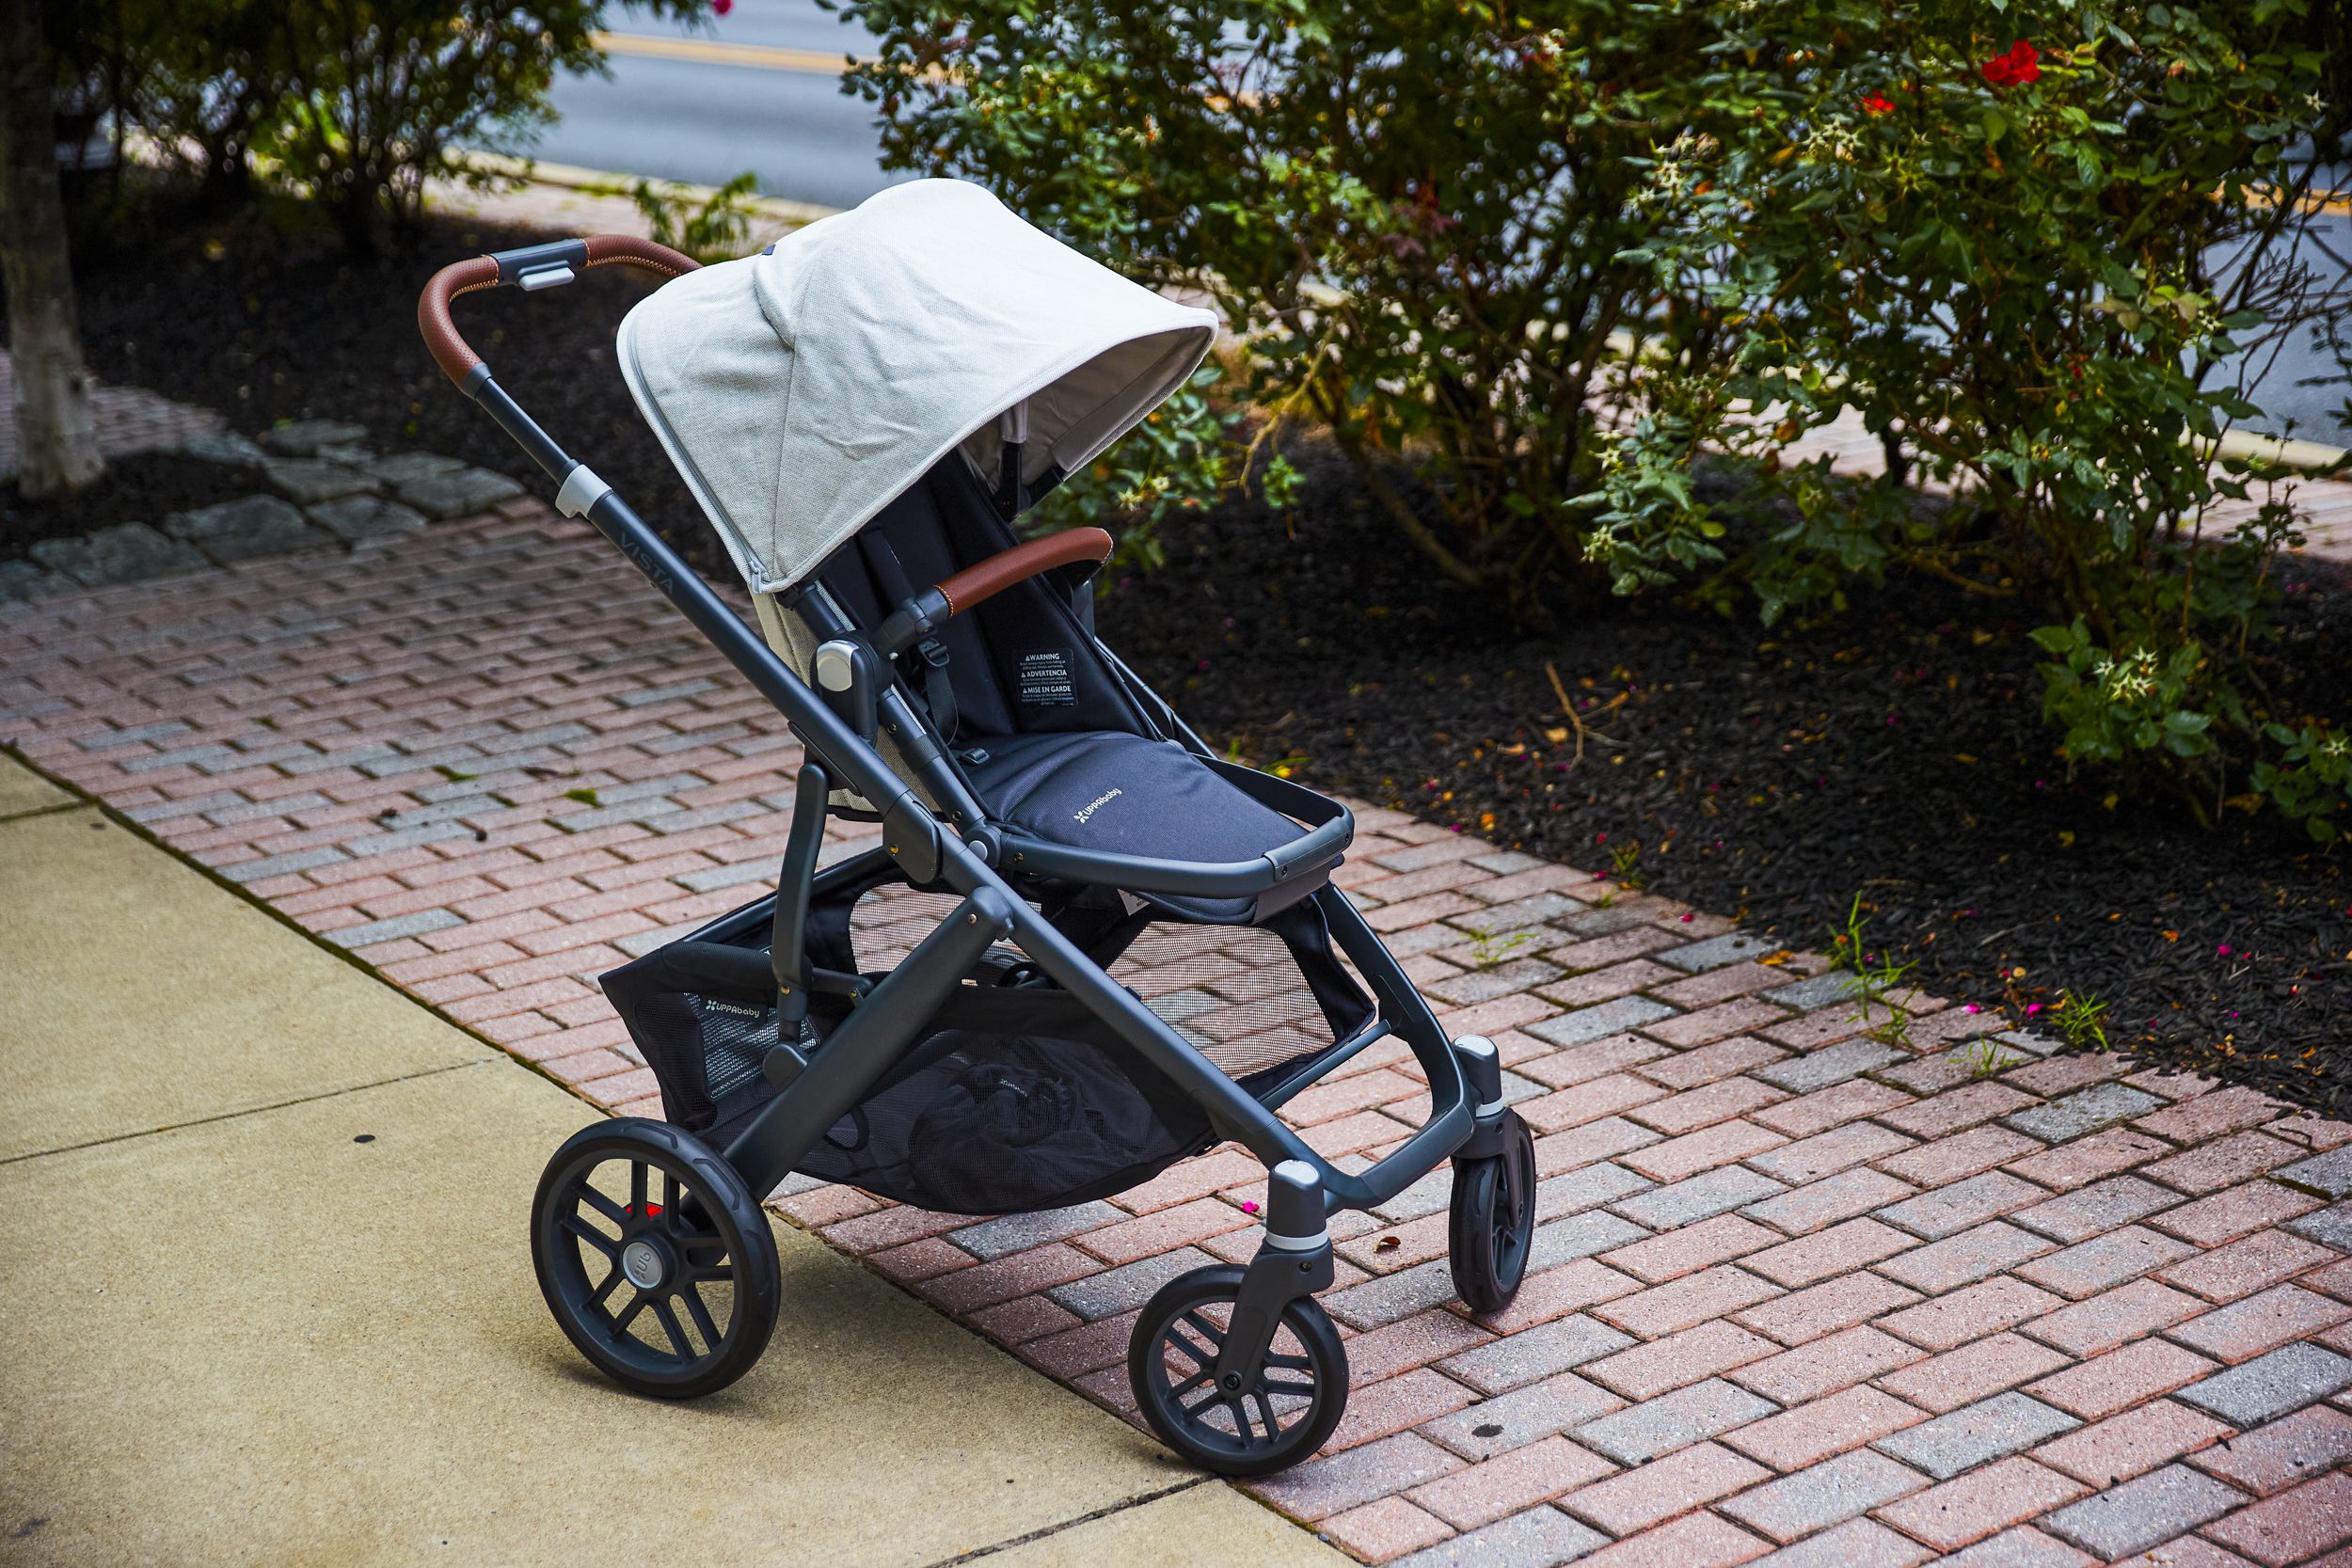 ComfyBaby™ 3 in 1 Baby Pram or Stroller For Newborn/Infant I Buy Online  Baby Stroller or Palm